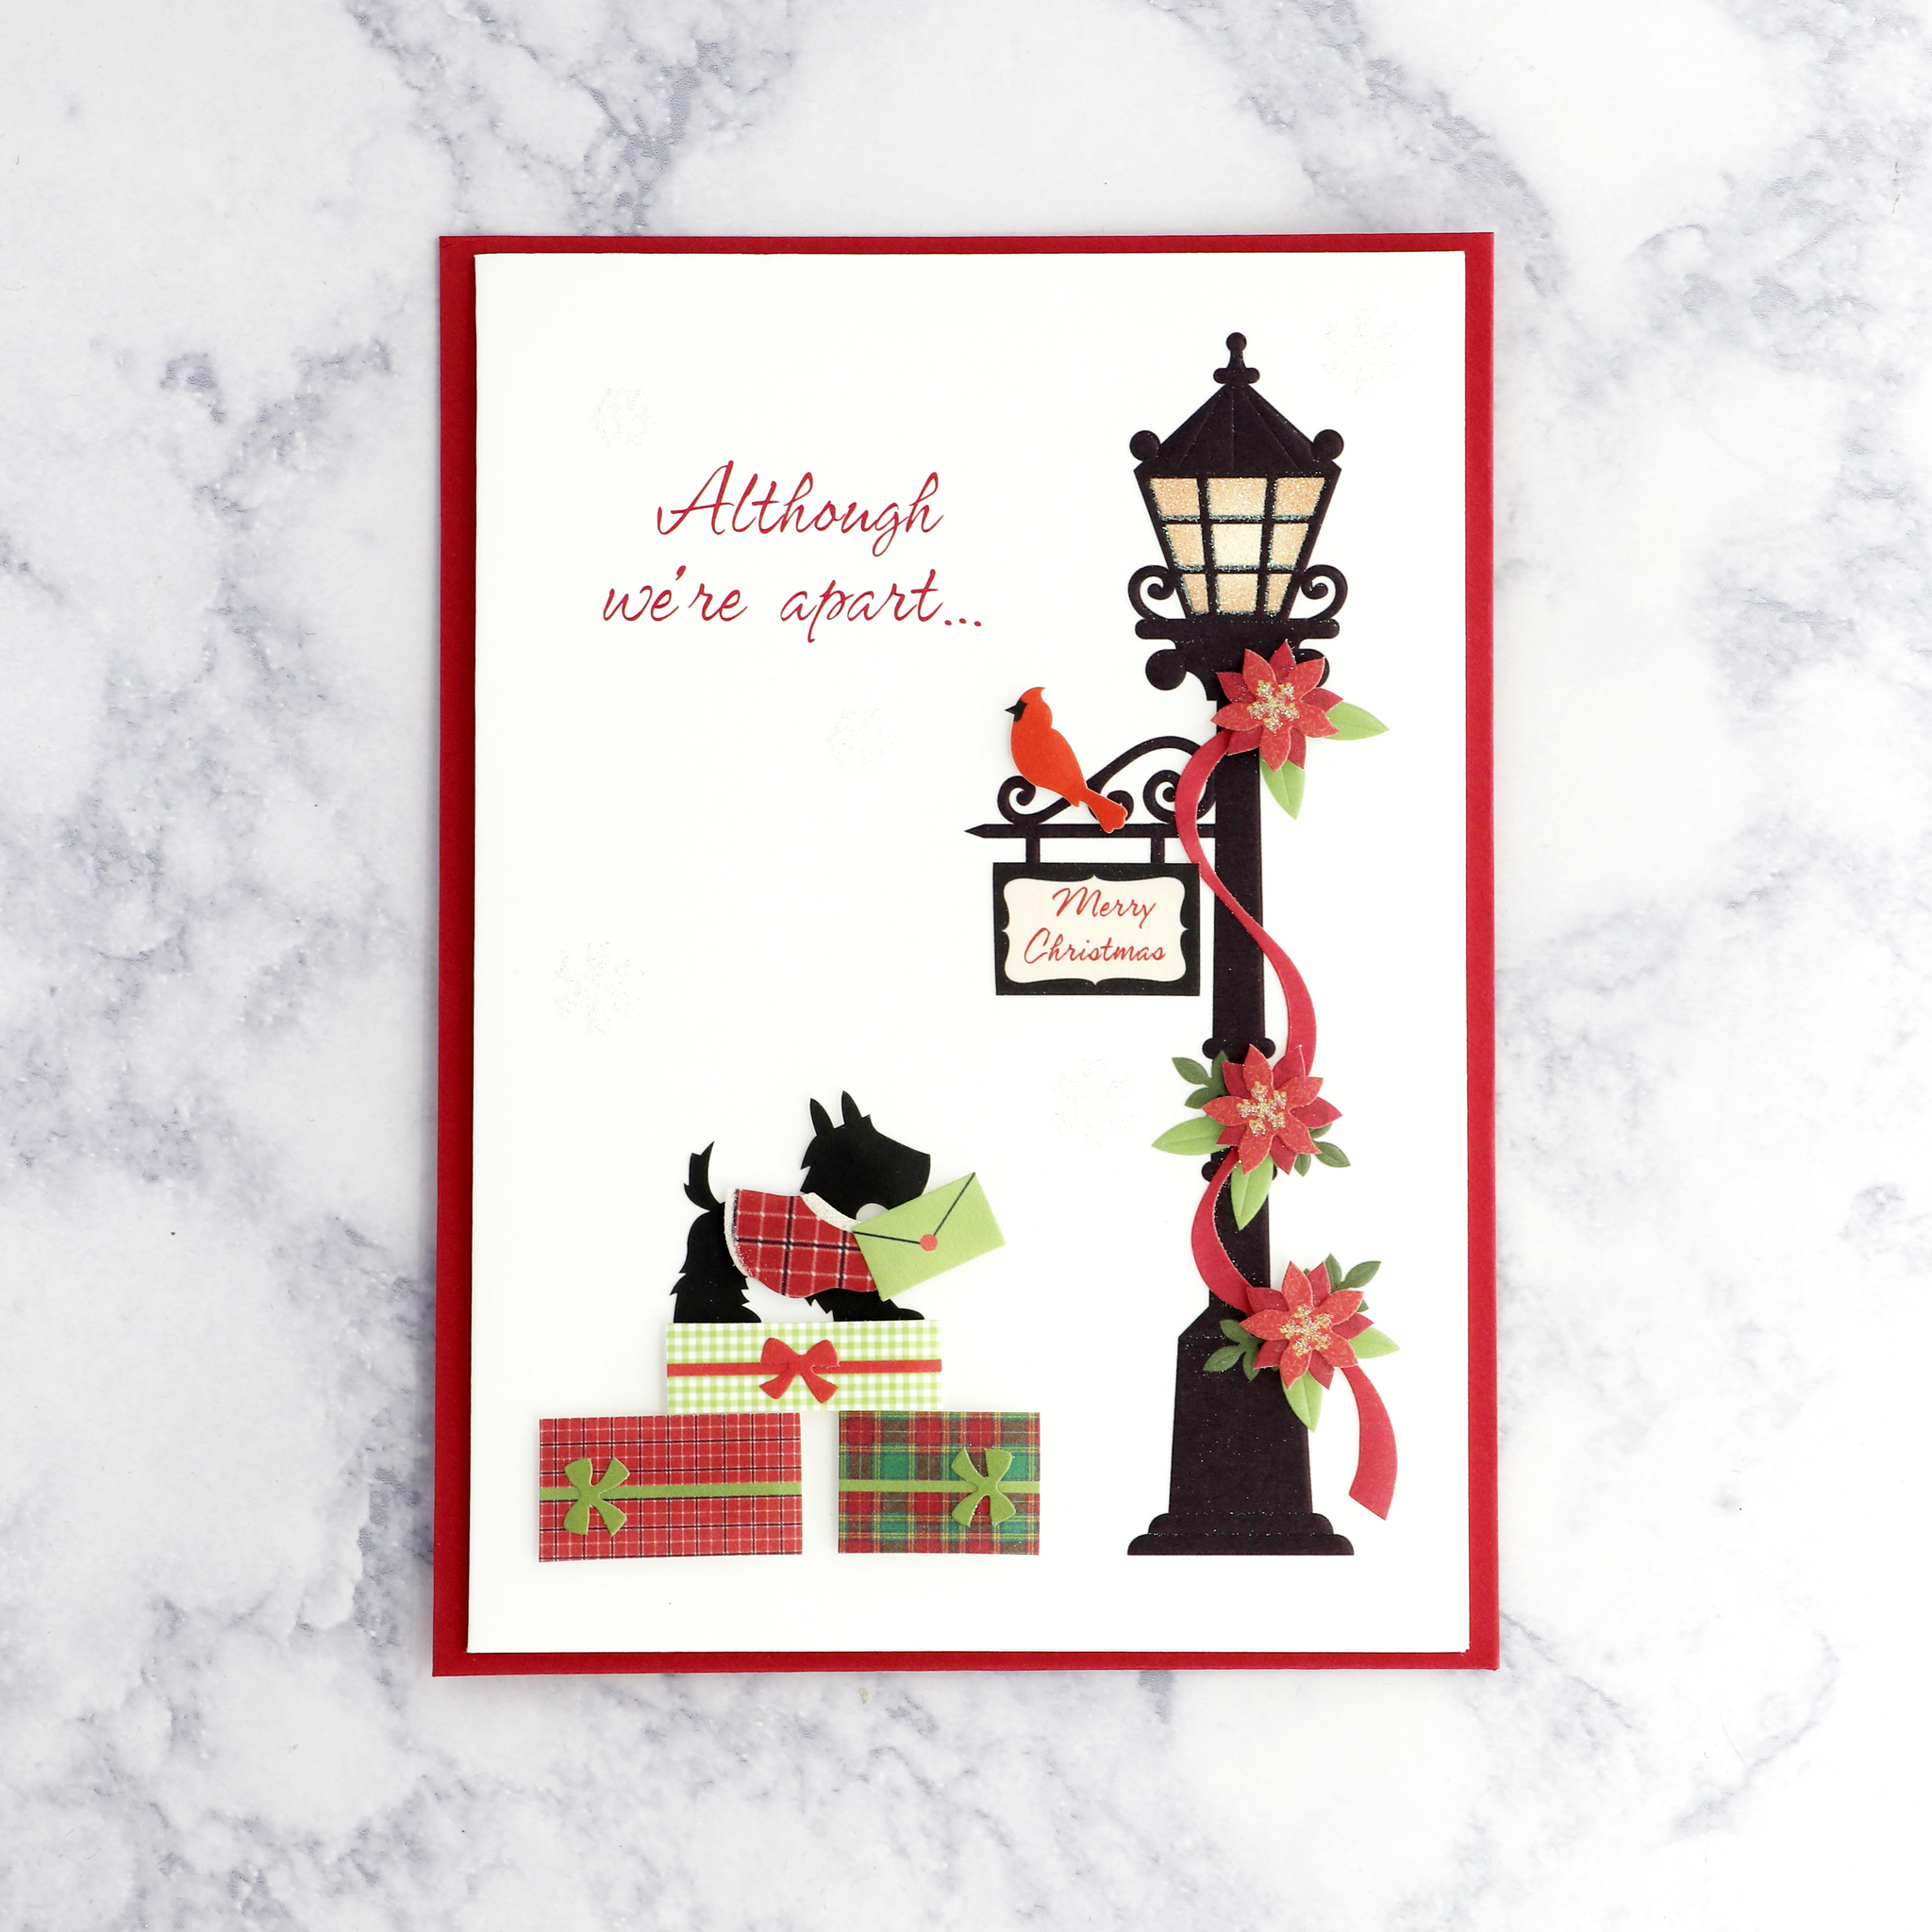 Handmade Lamp "Across The Miles" Christmas Card